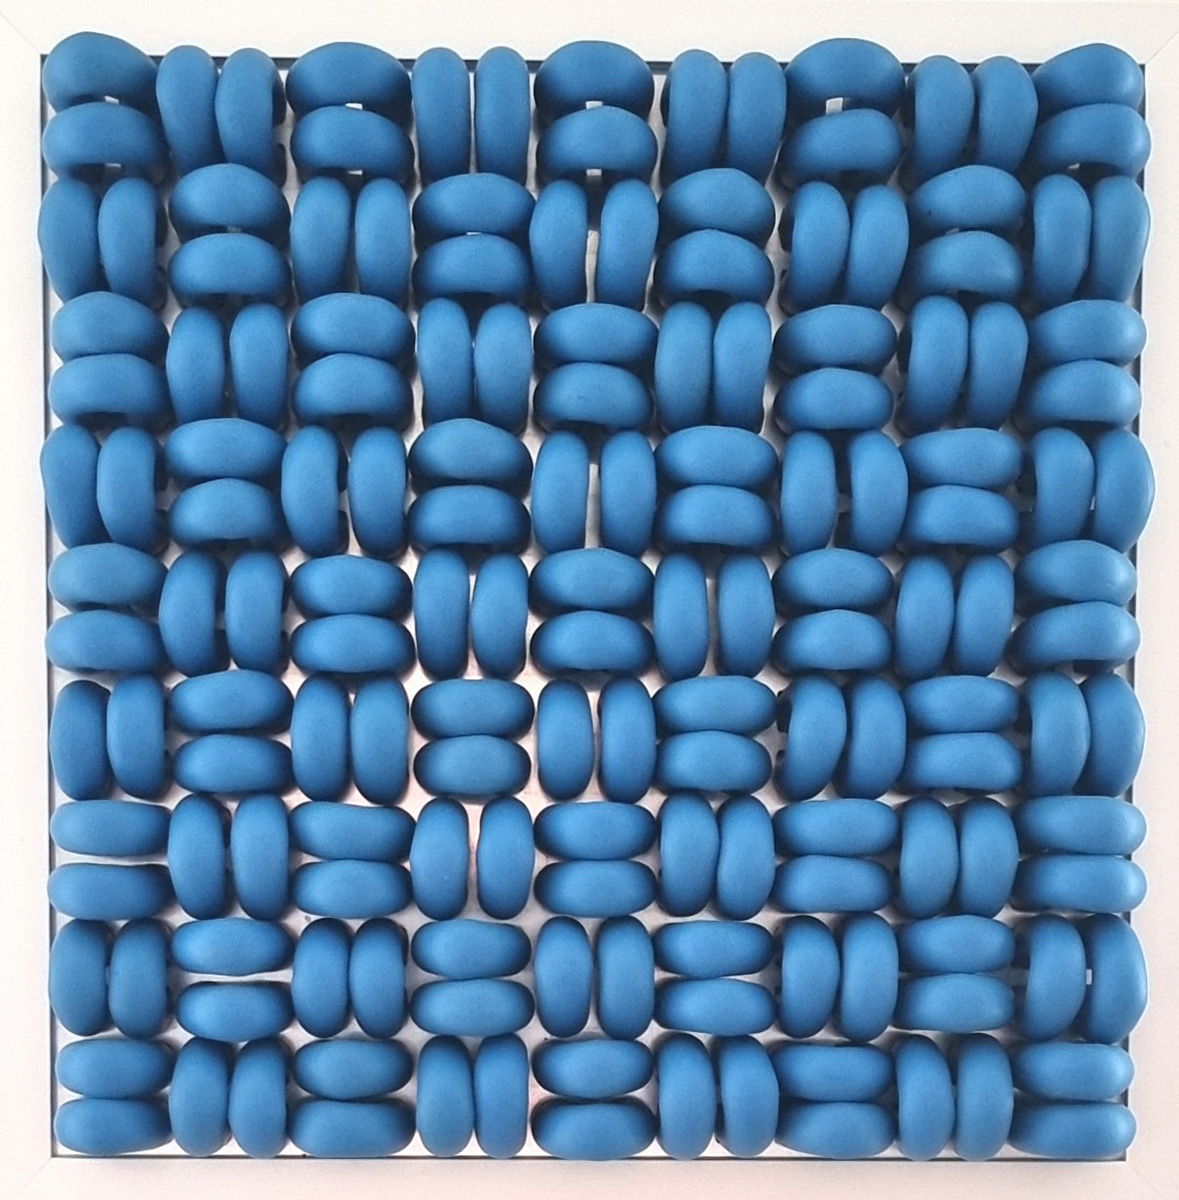 5 Farben (Blau), 202230 x 30 x 5,5 cmAluminium, elastomere Rundschnüre